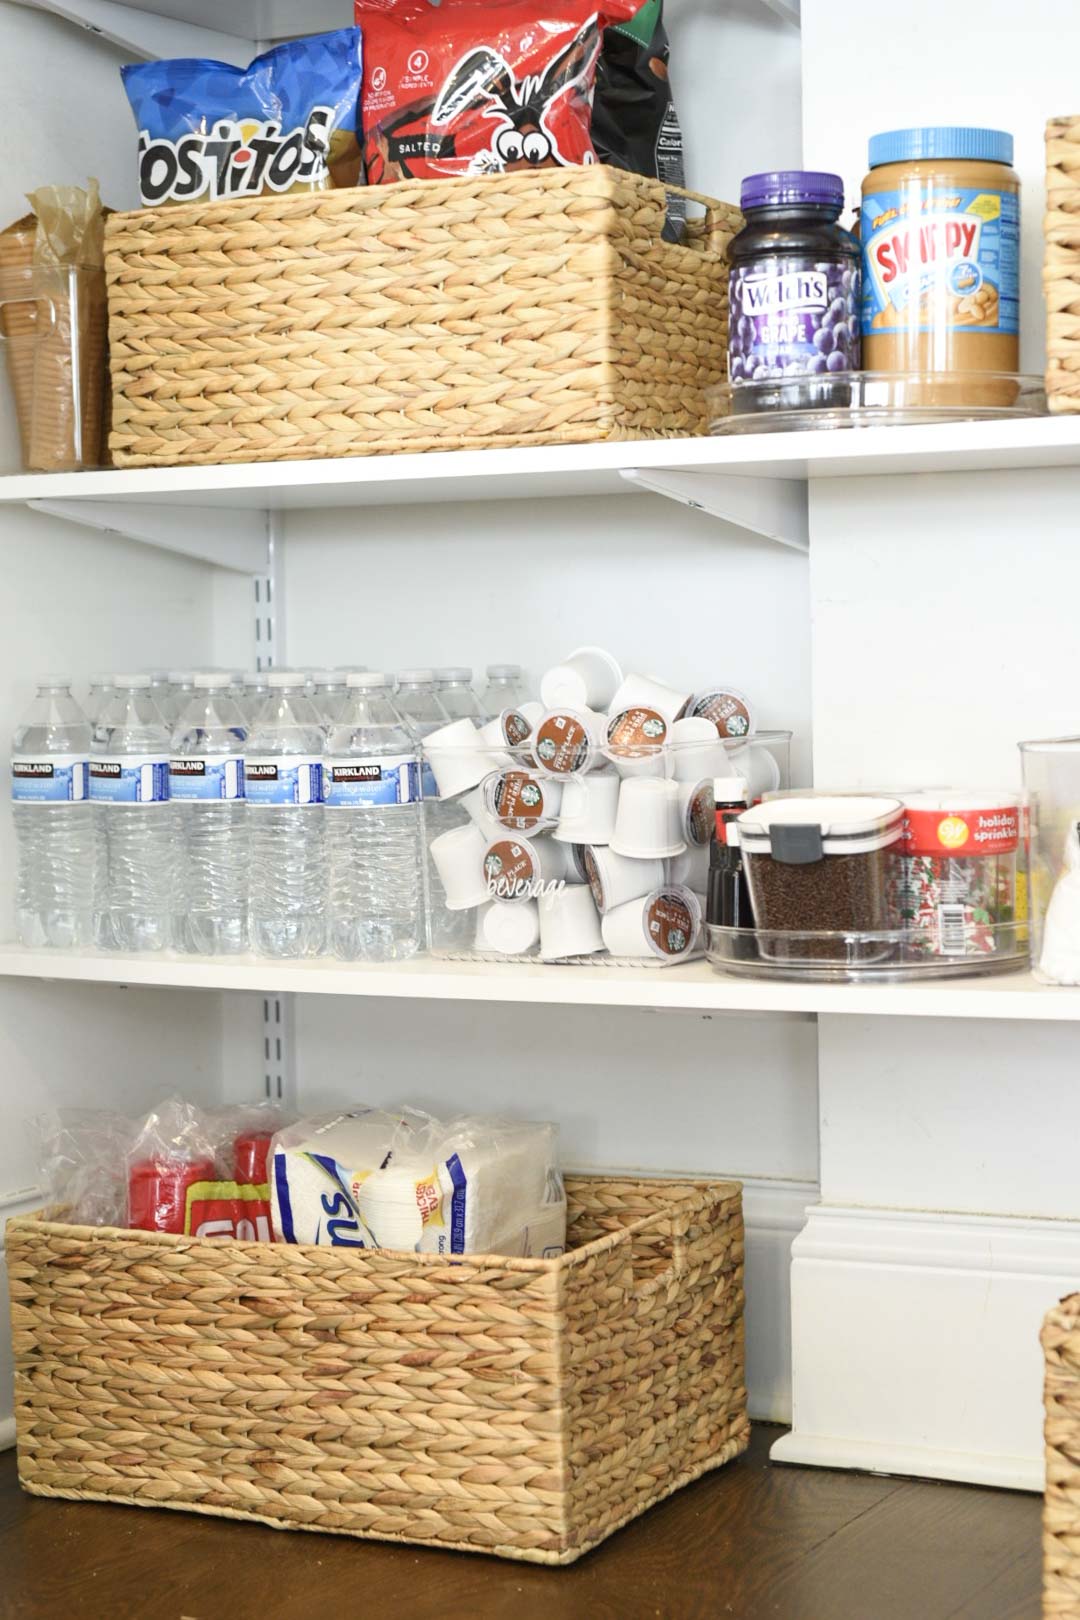 Best Products For Pantry Organization
#pantryorganization #kitchenpantry 